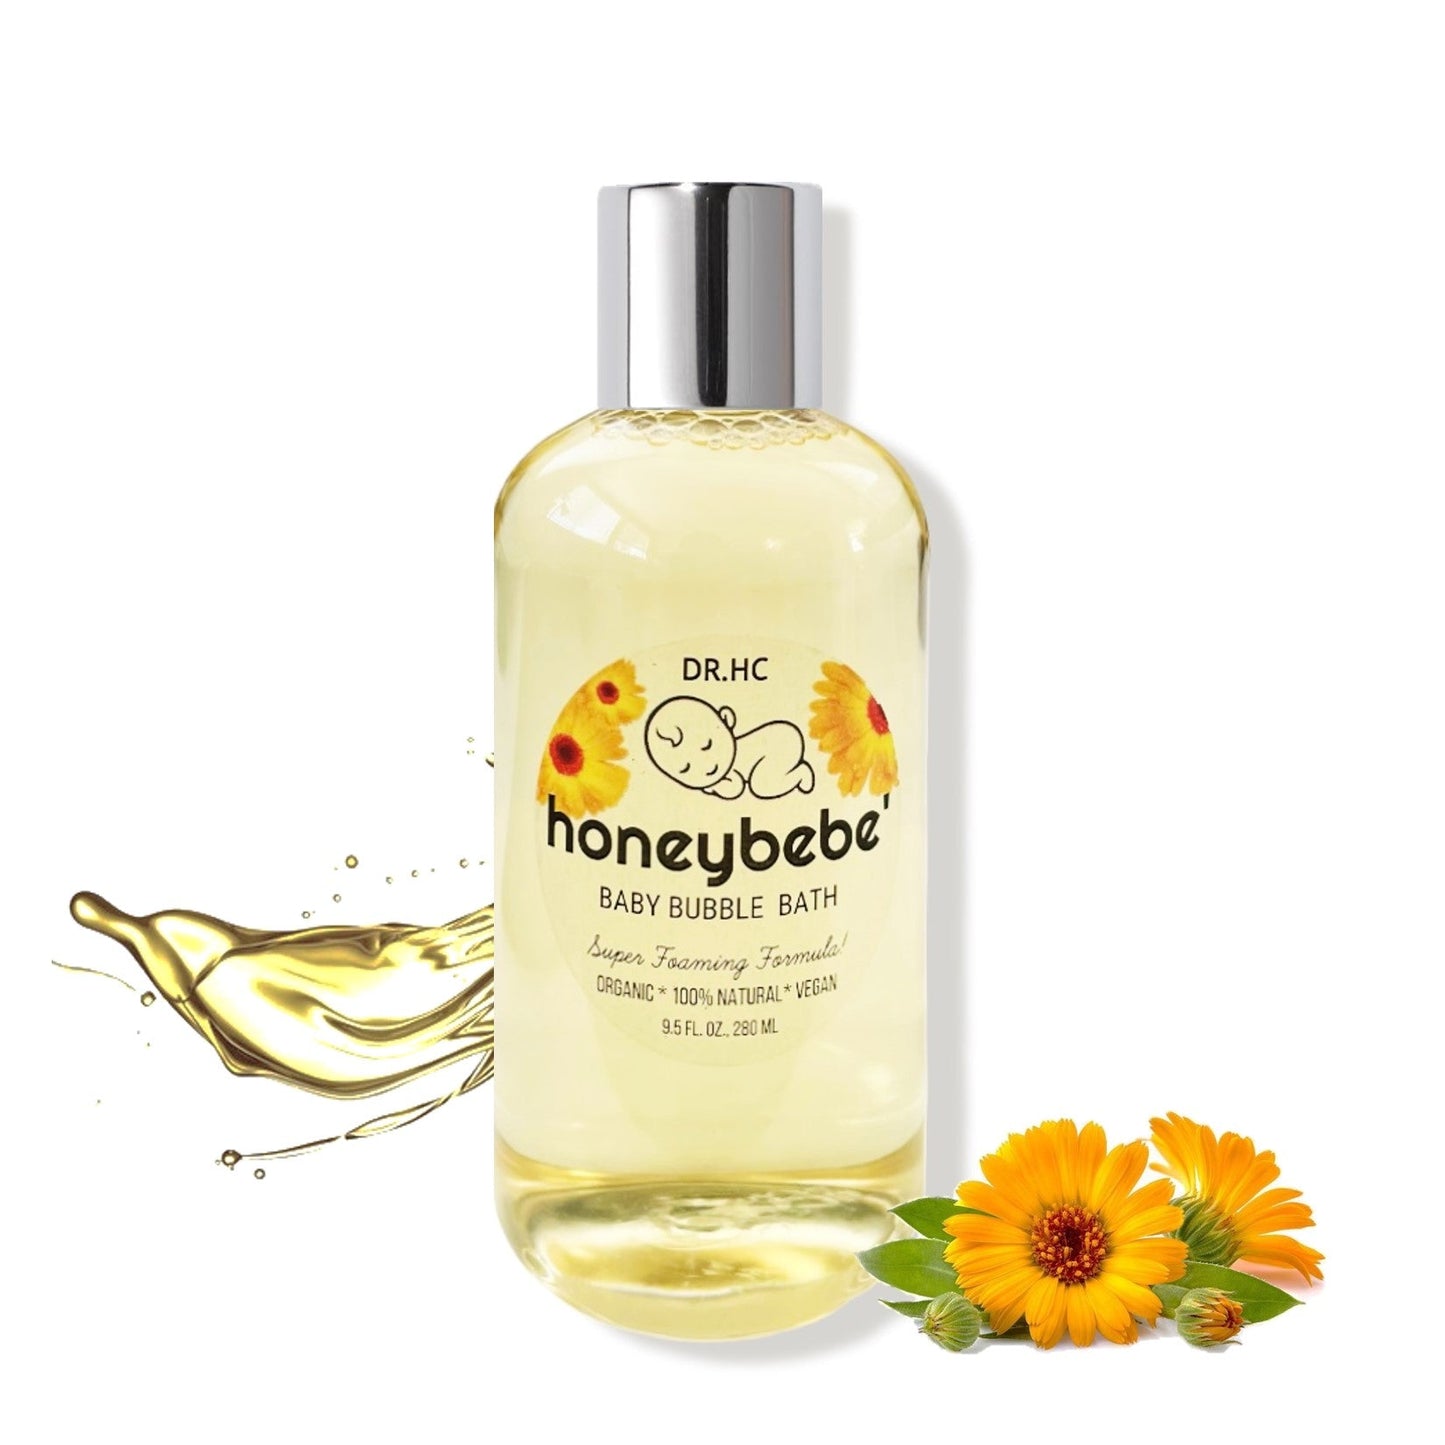 DR.HC Honeybebe' Baby Bubble Bath (Refreshing Patchouli) - For Baby & Mommy (9.5 fl.oz., 280 ml)-2